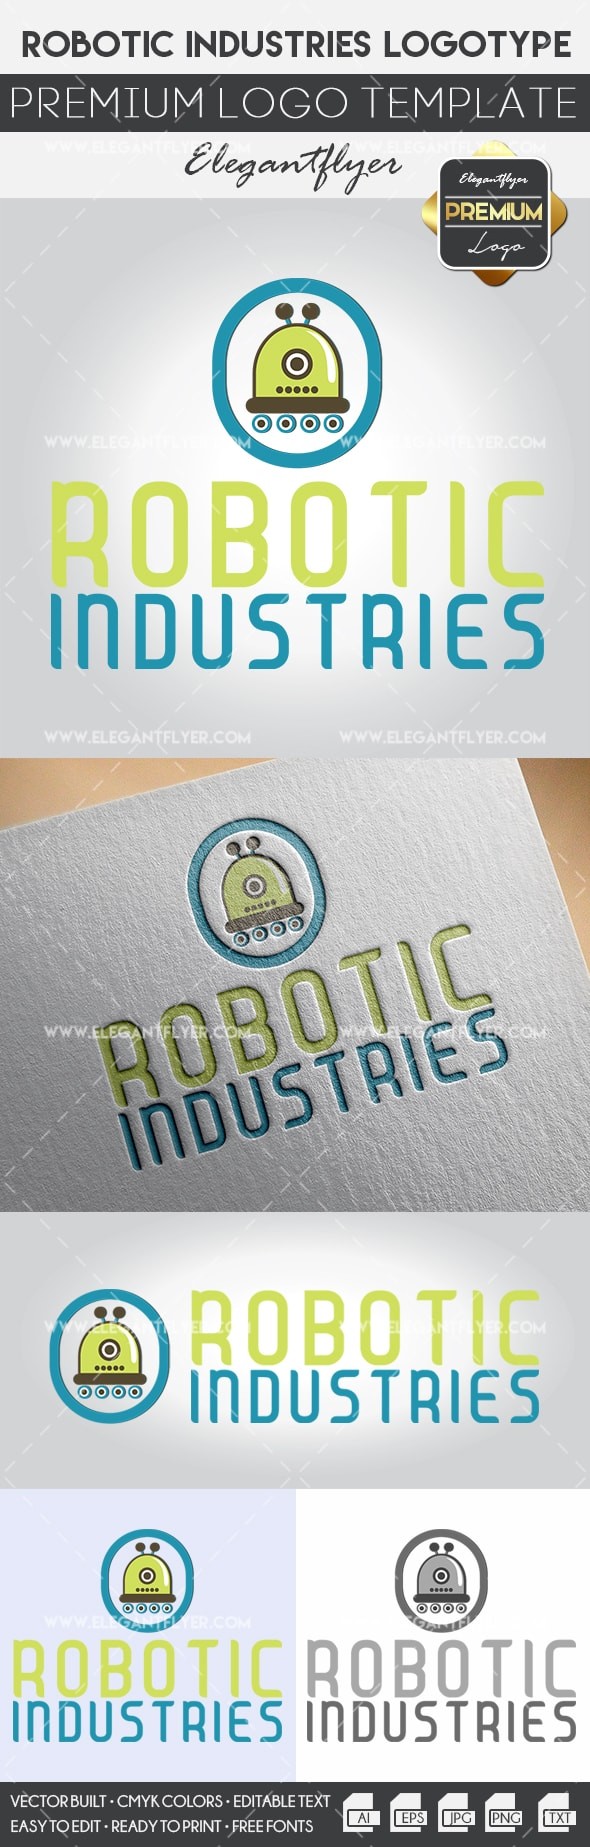 Robotic Industries by ElegantFlyer